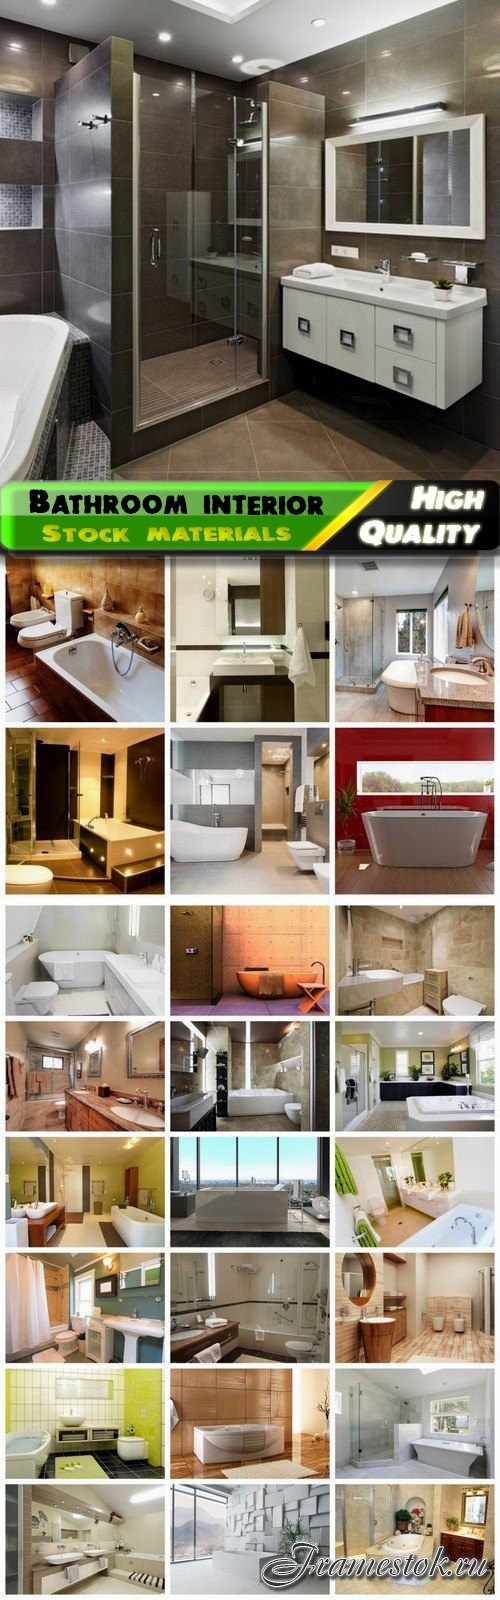 House apartment design and bathroom modern interior - 25 HQ Jpg